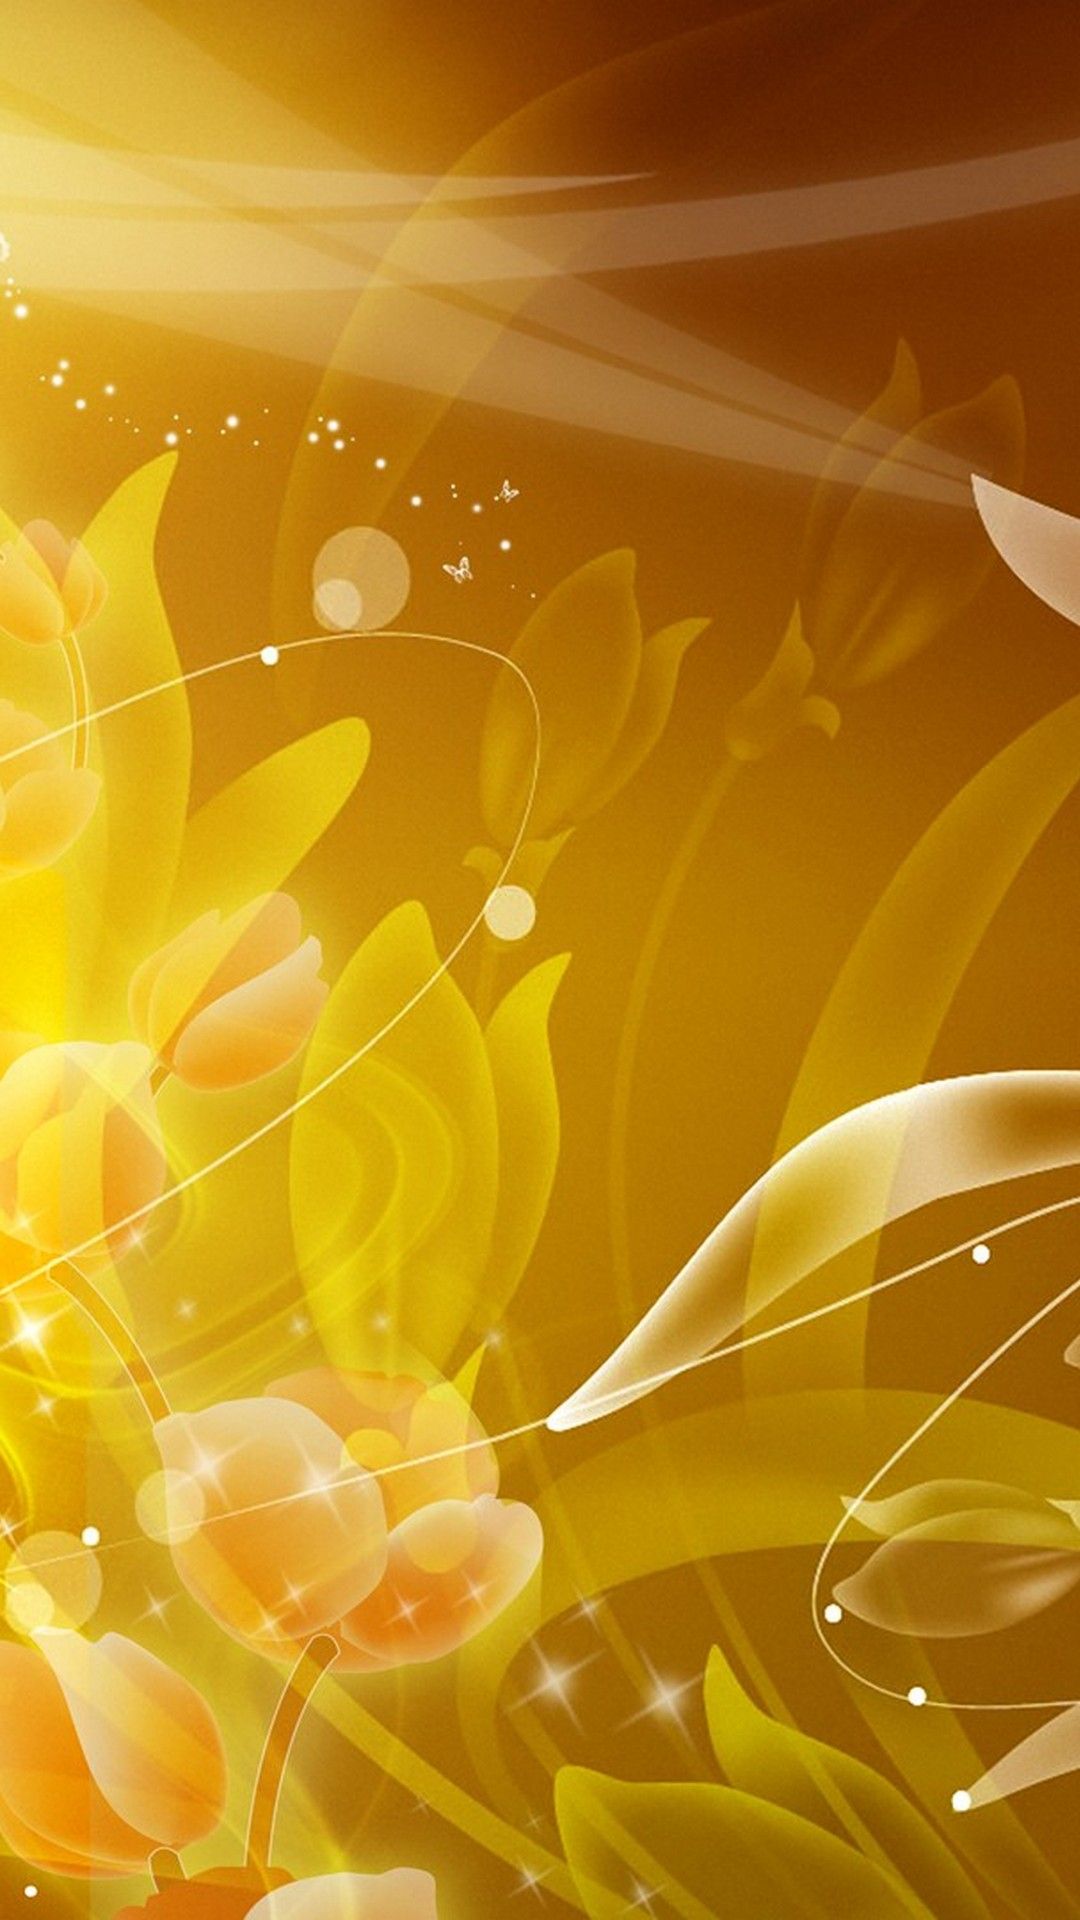 iPhone Wallpaper Gold Designs iPhonewallpaper